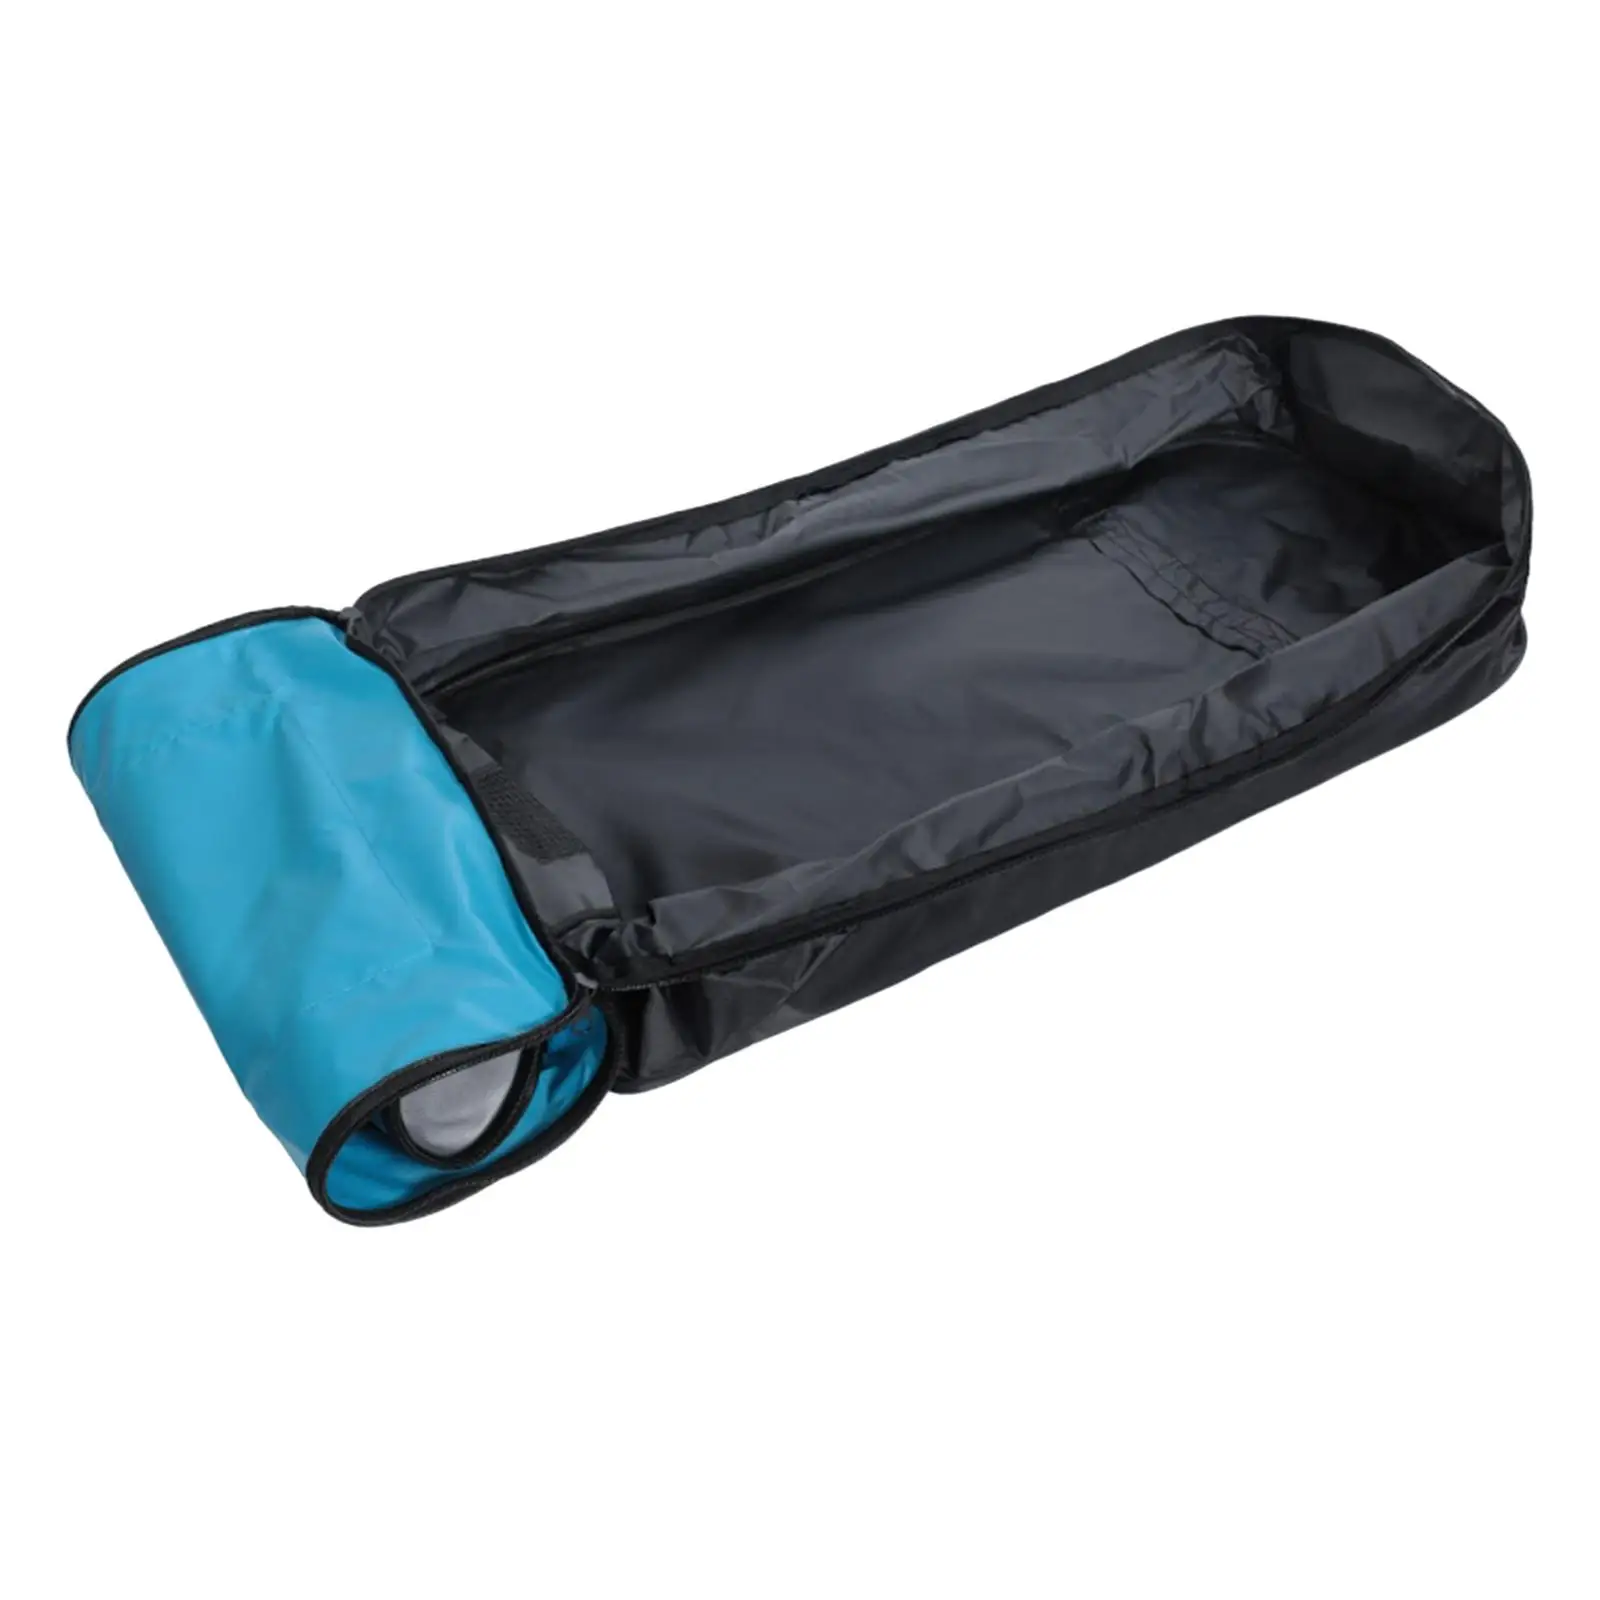 Inflatable Paddle Board Backpack Surf Board Rucksack for Surfing Kayaking